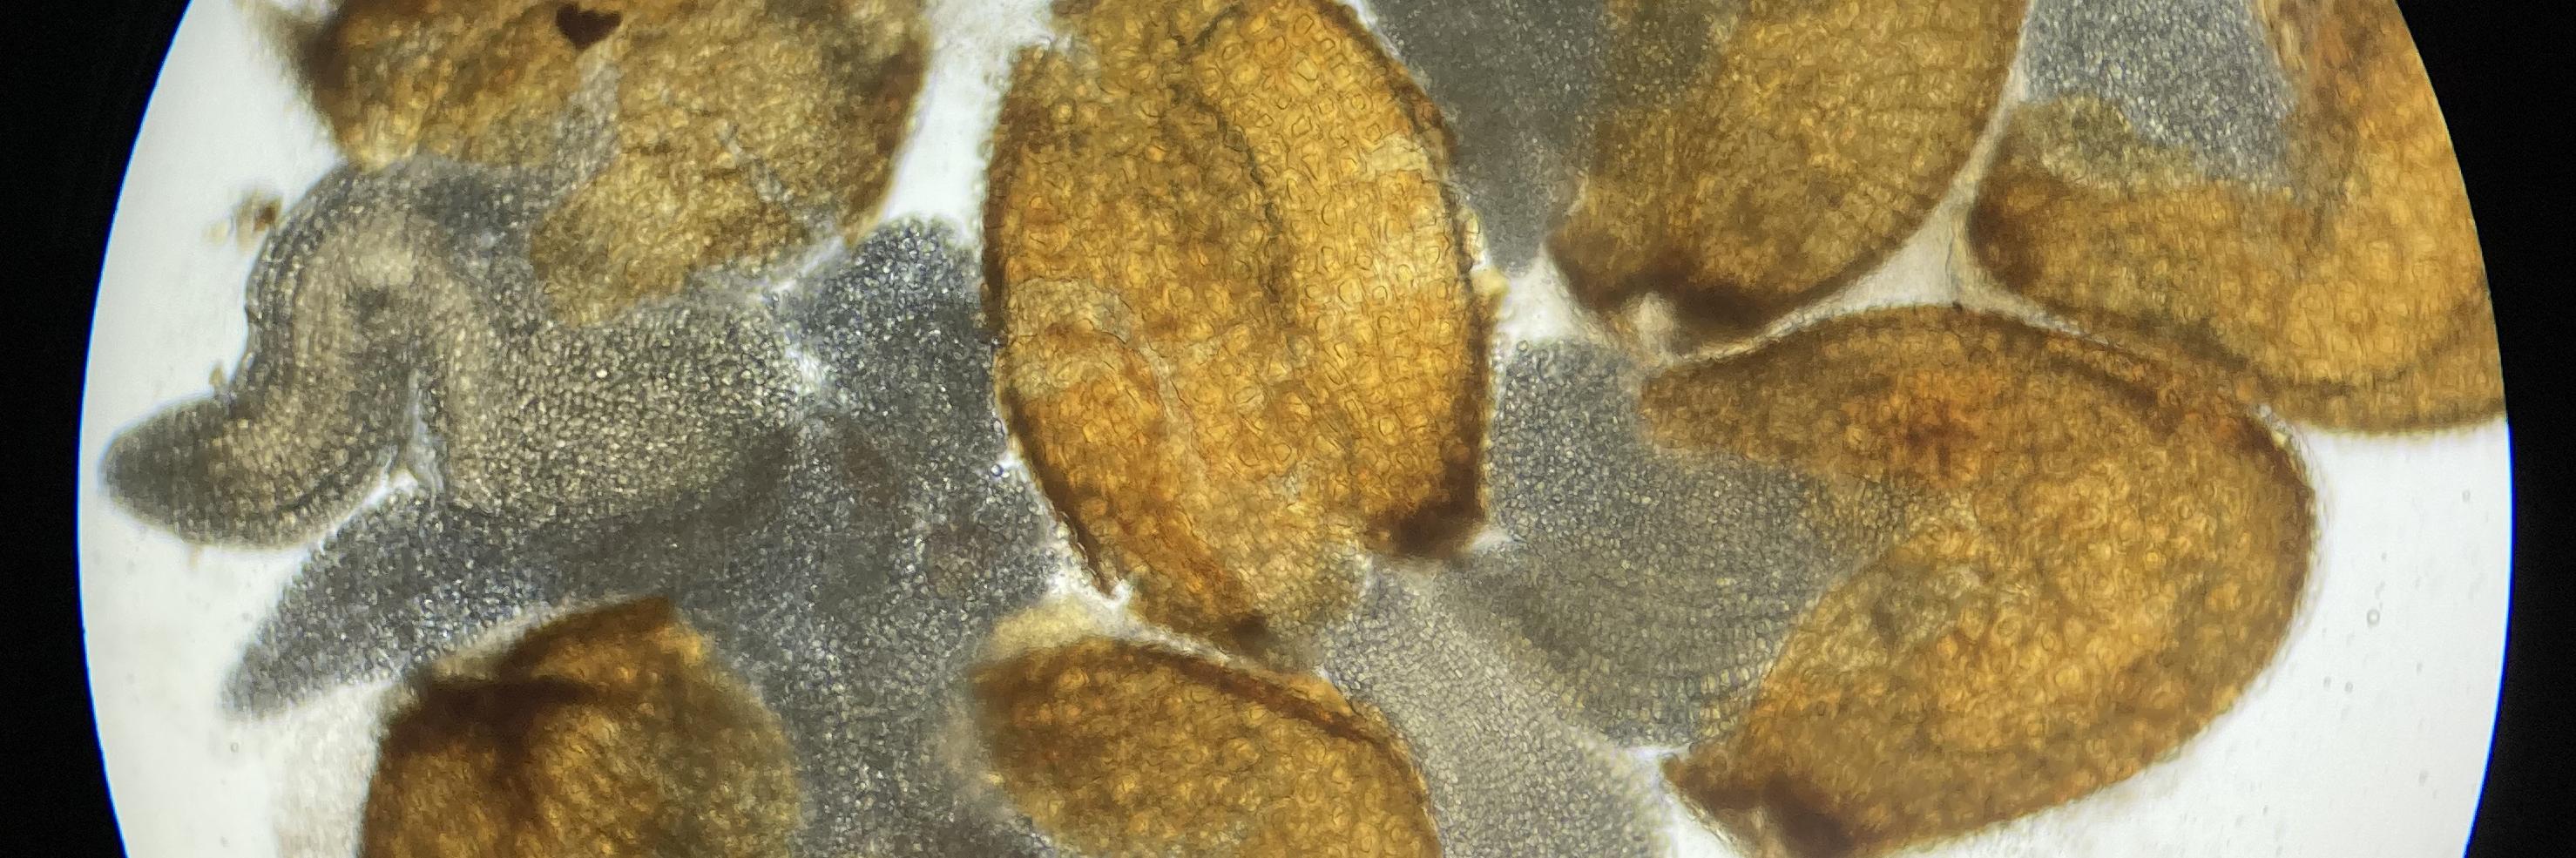 microscopic image of fungi spores 